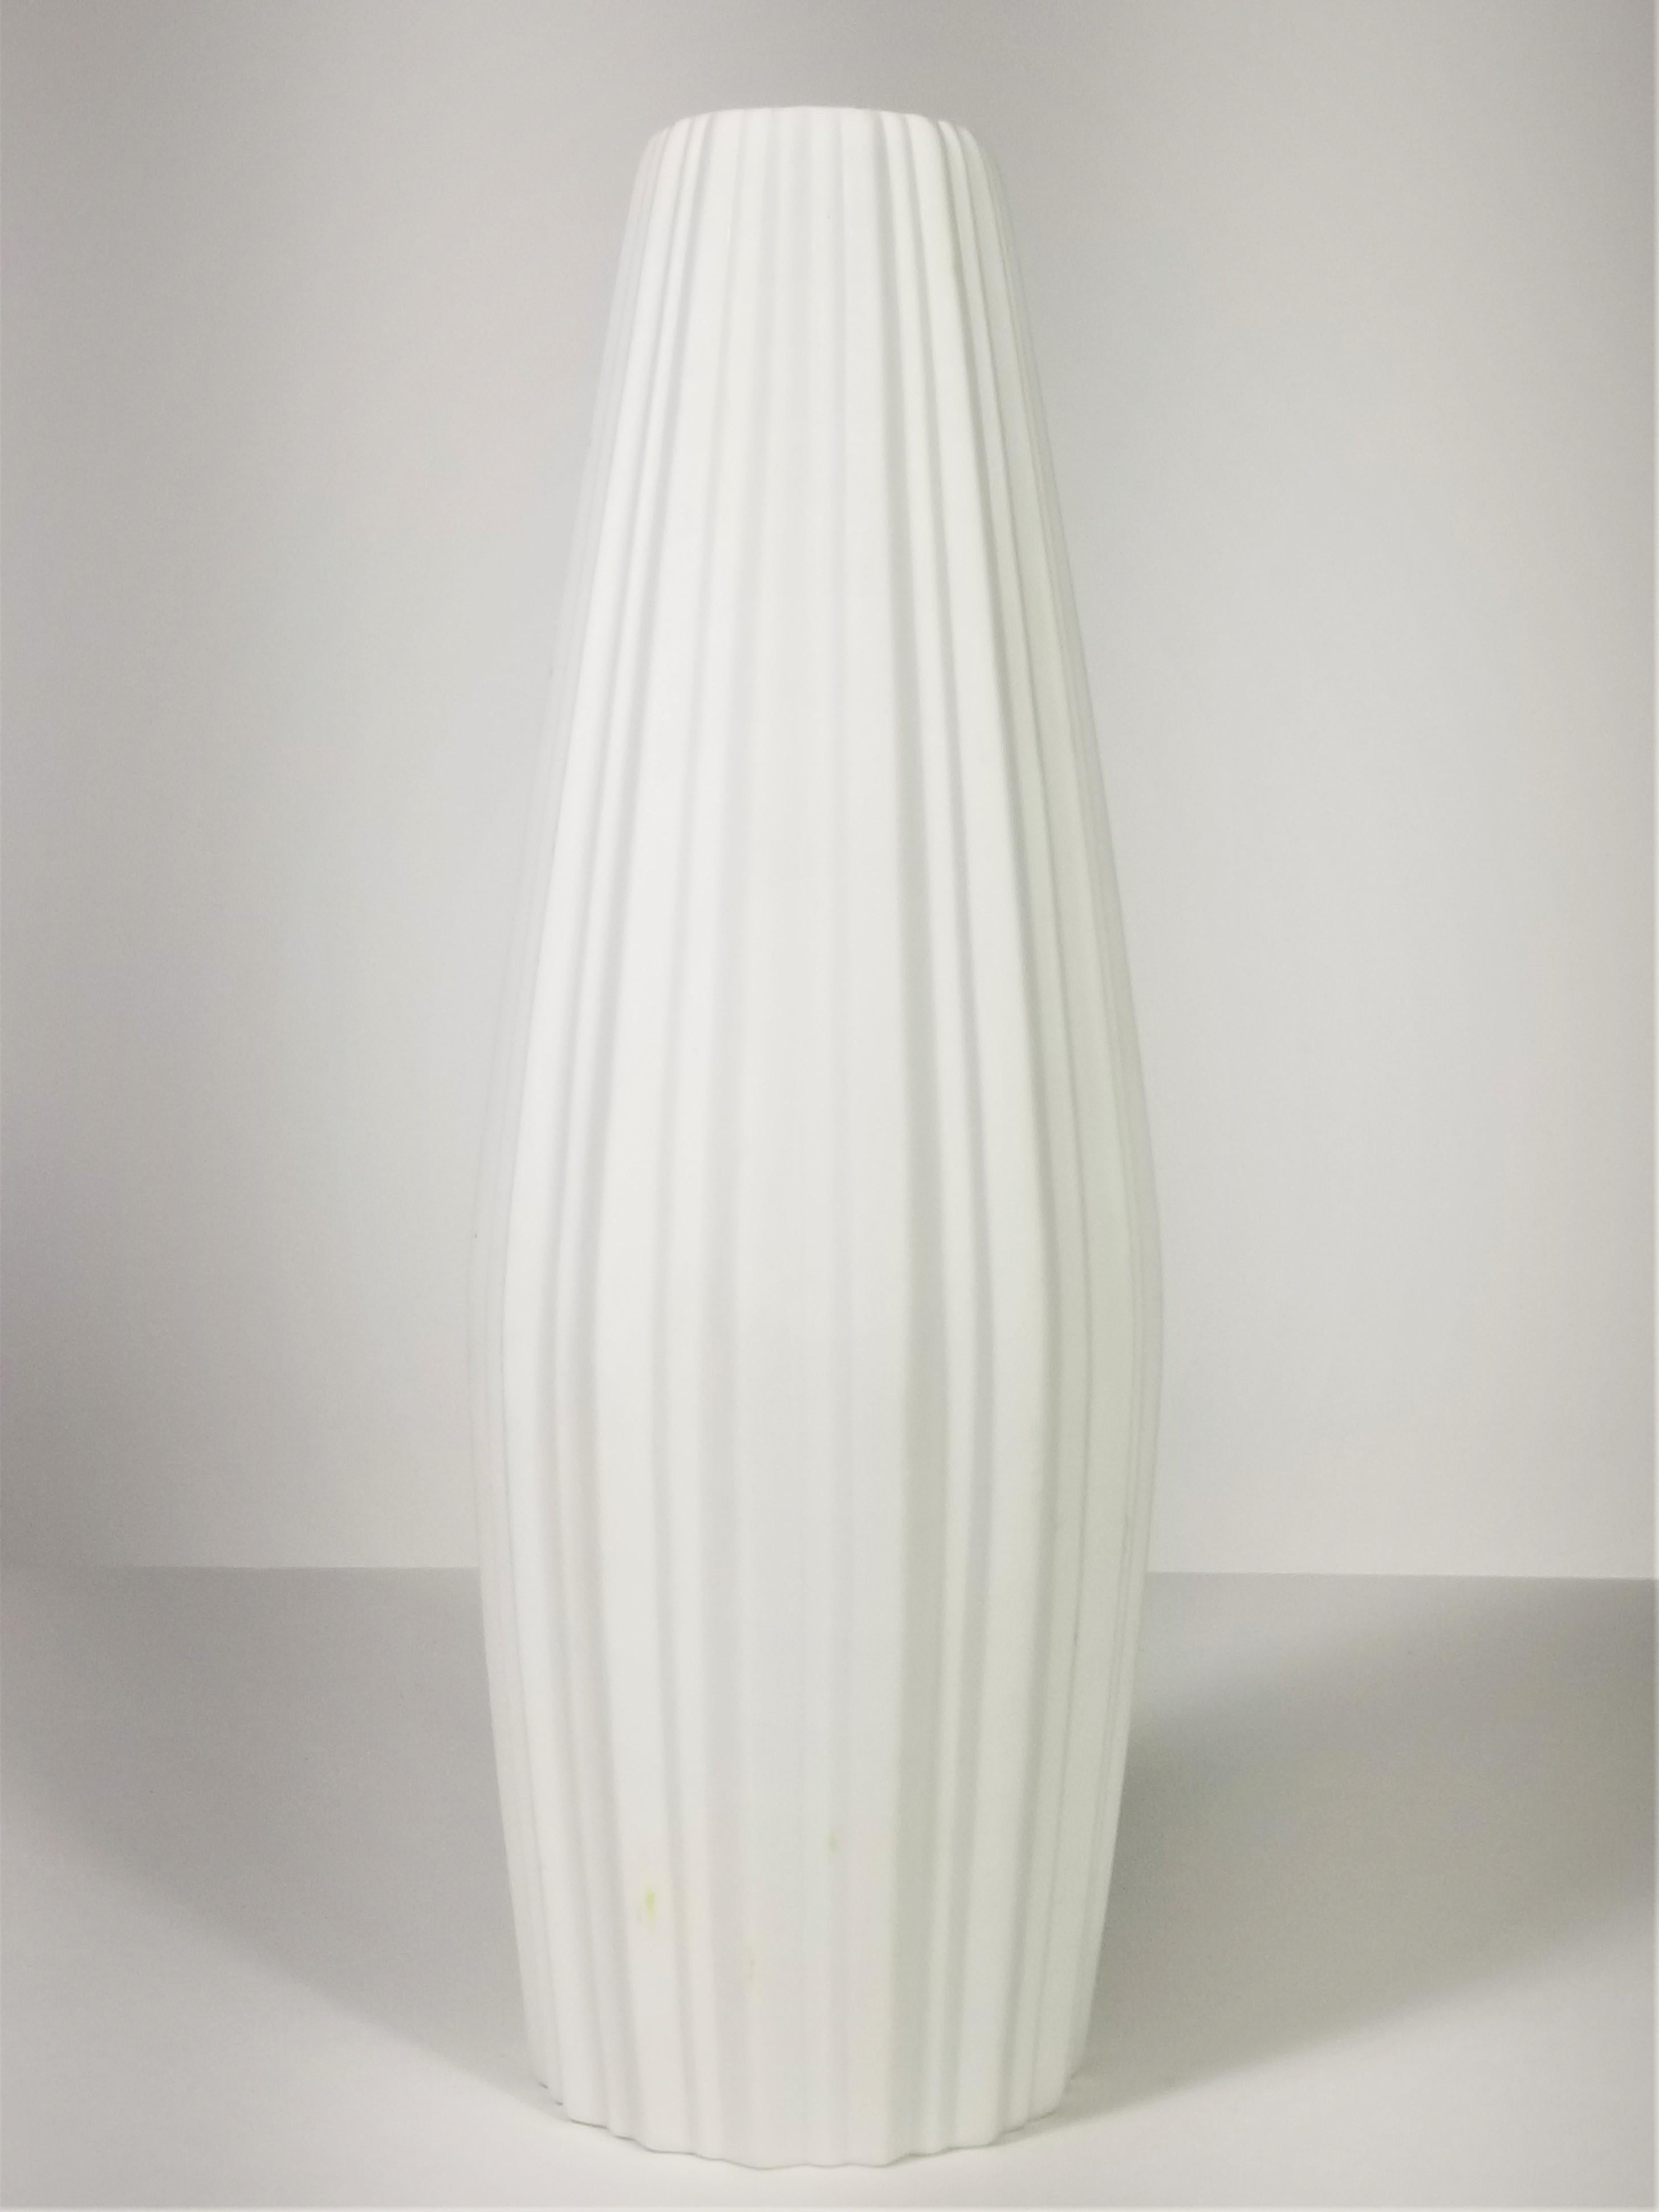 Mid Century White Bisque Porcelain Vase Signed Heinrich Selb Bavaria, Germany. Excellent Condition. 